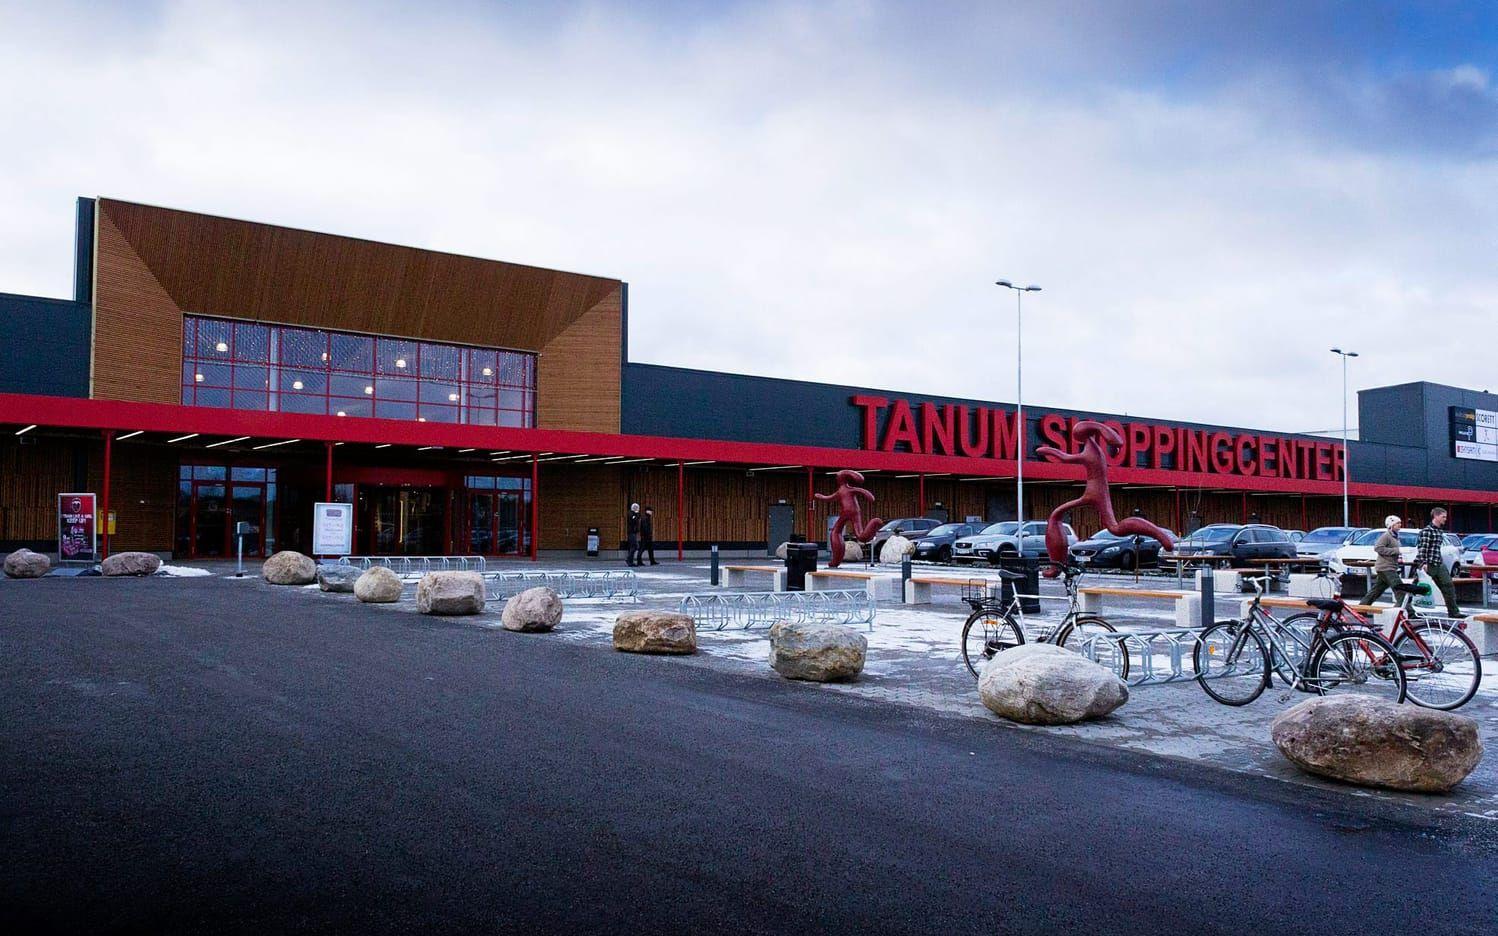 Tanum shoppingcenter